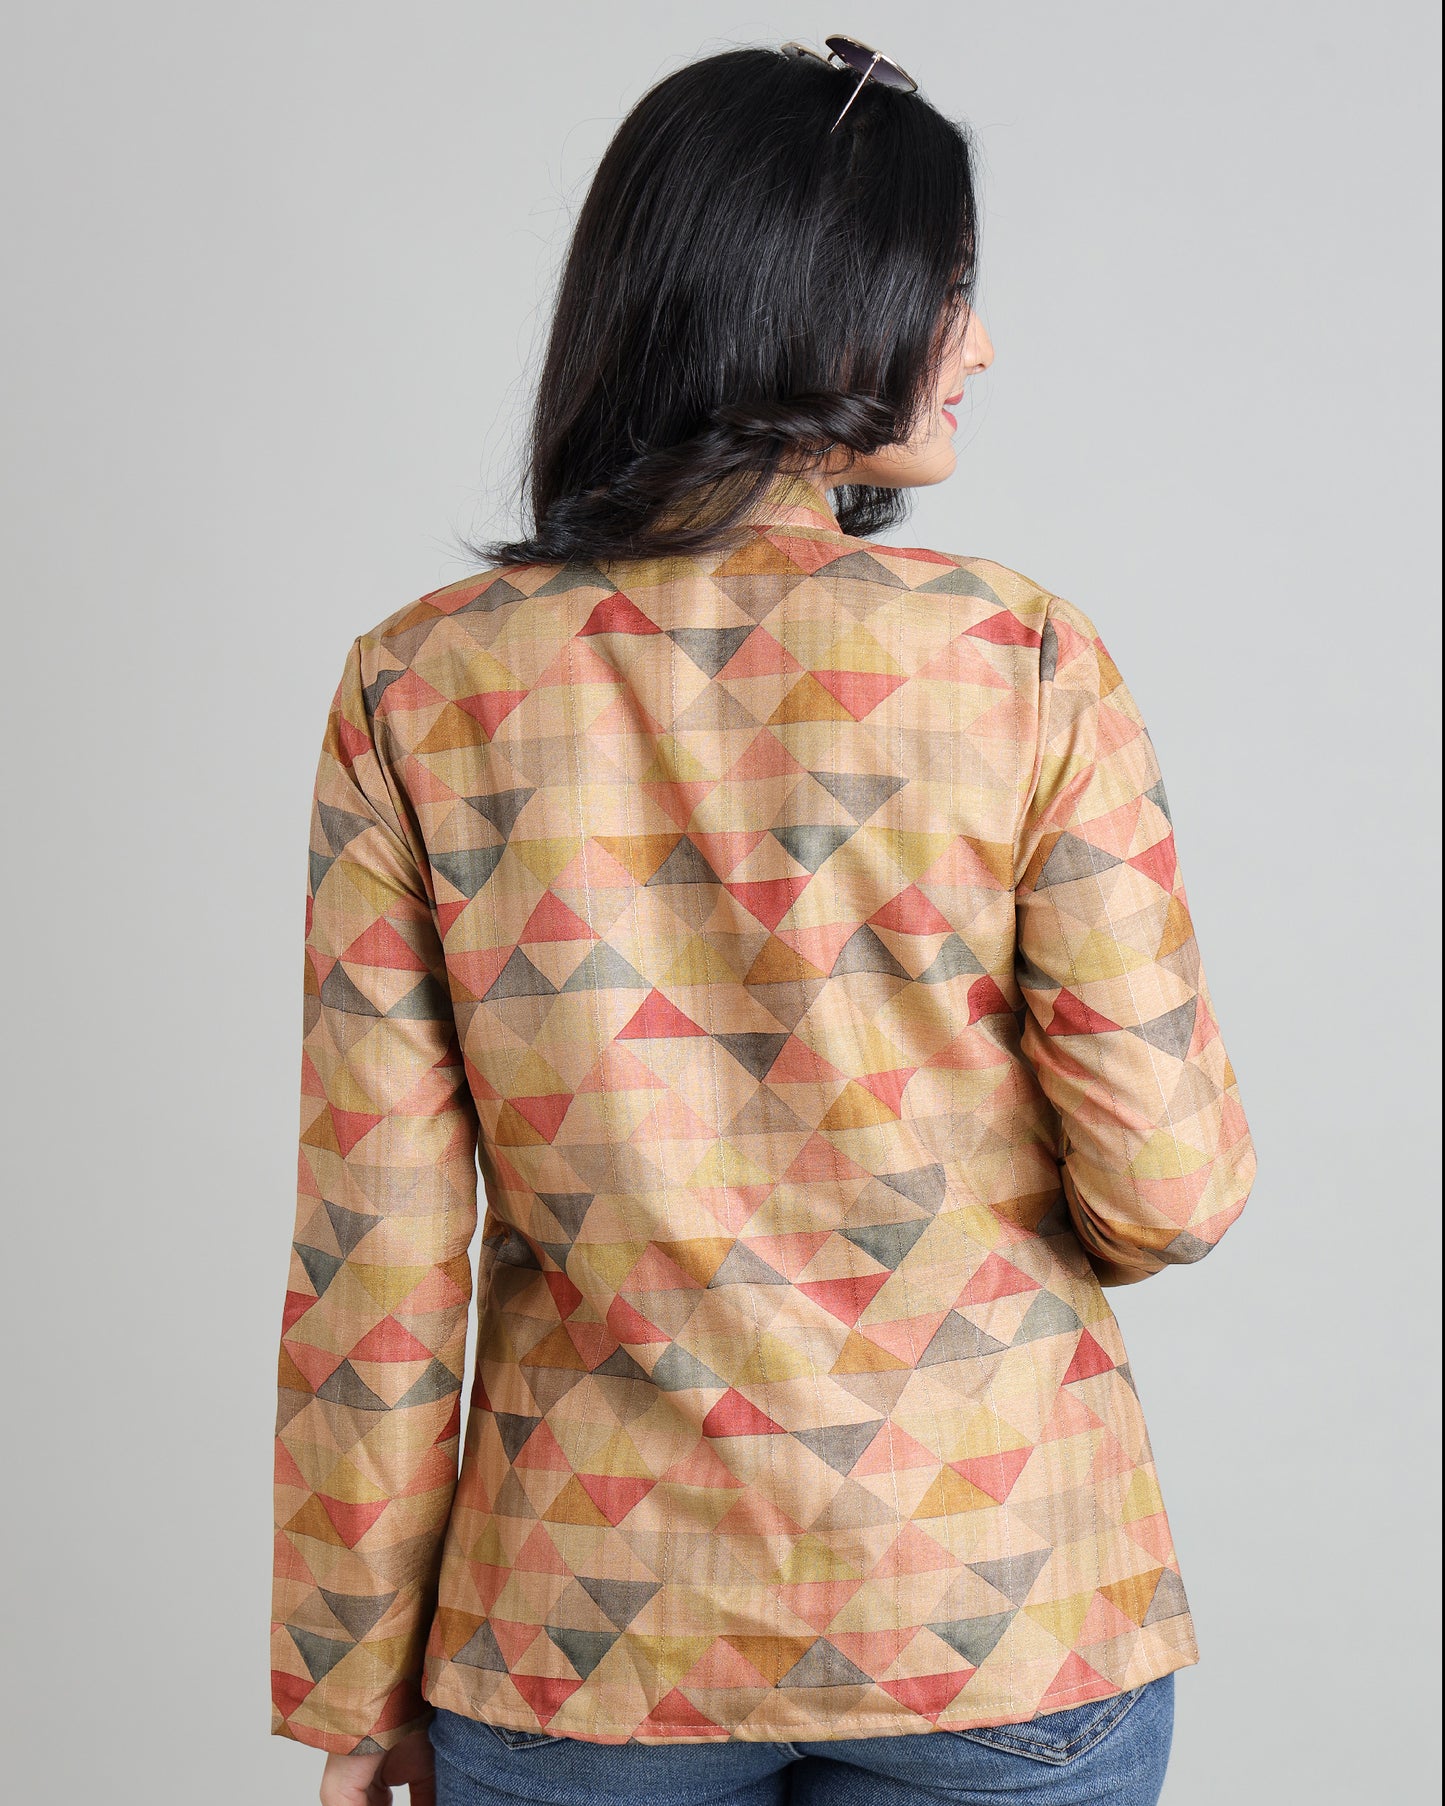 Striking Shapes : Women's Modern Geometric Jacket